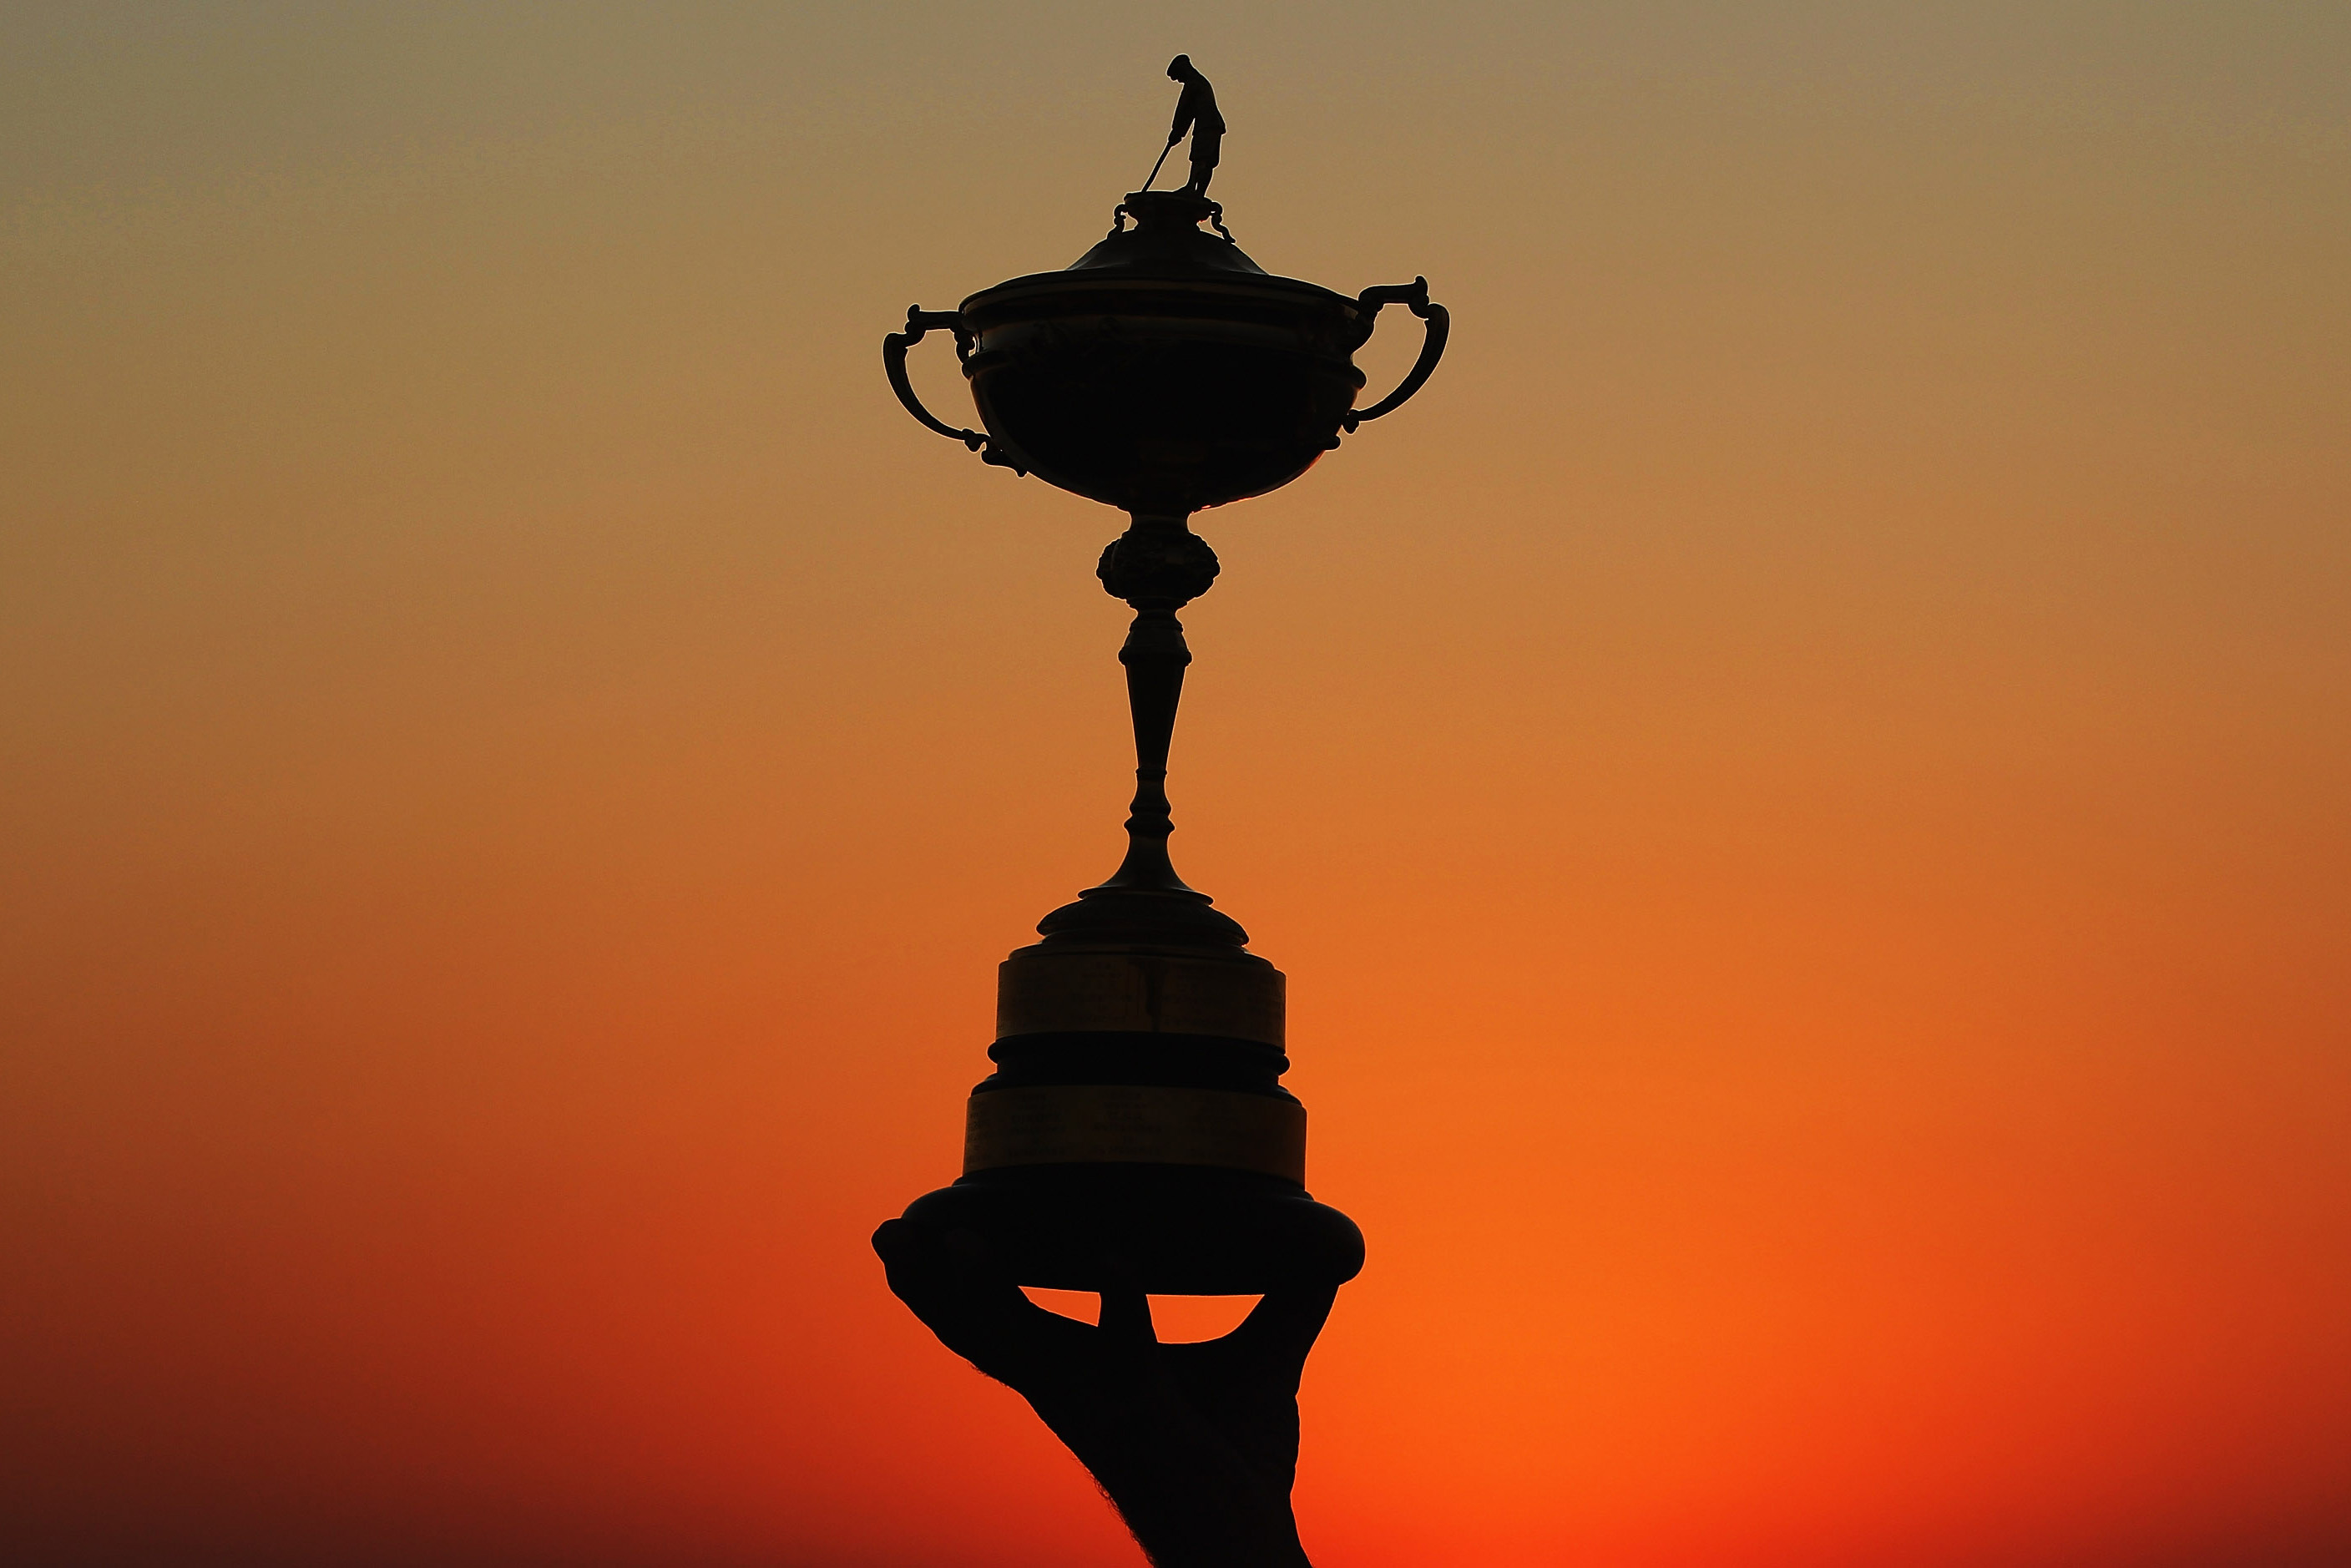 2020 European Ryder Cup team: GolfMagic predicts Harrington's lineup